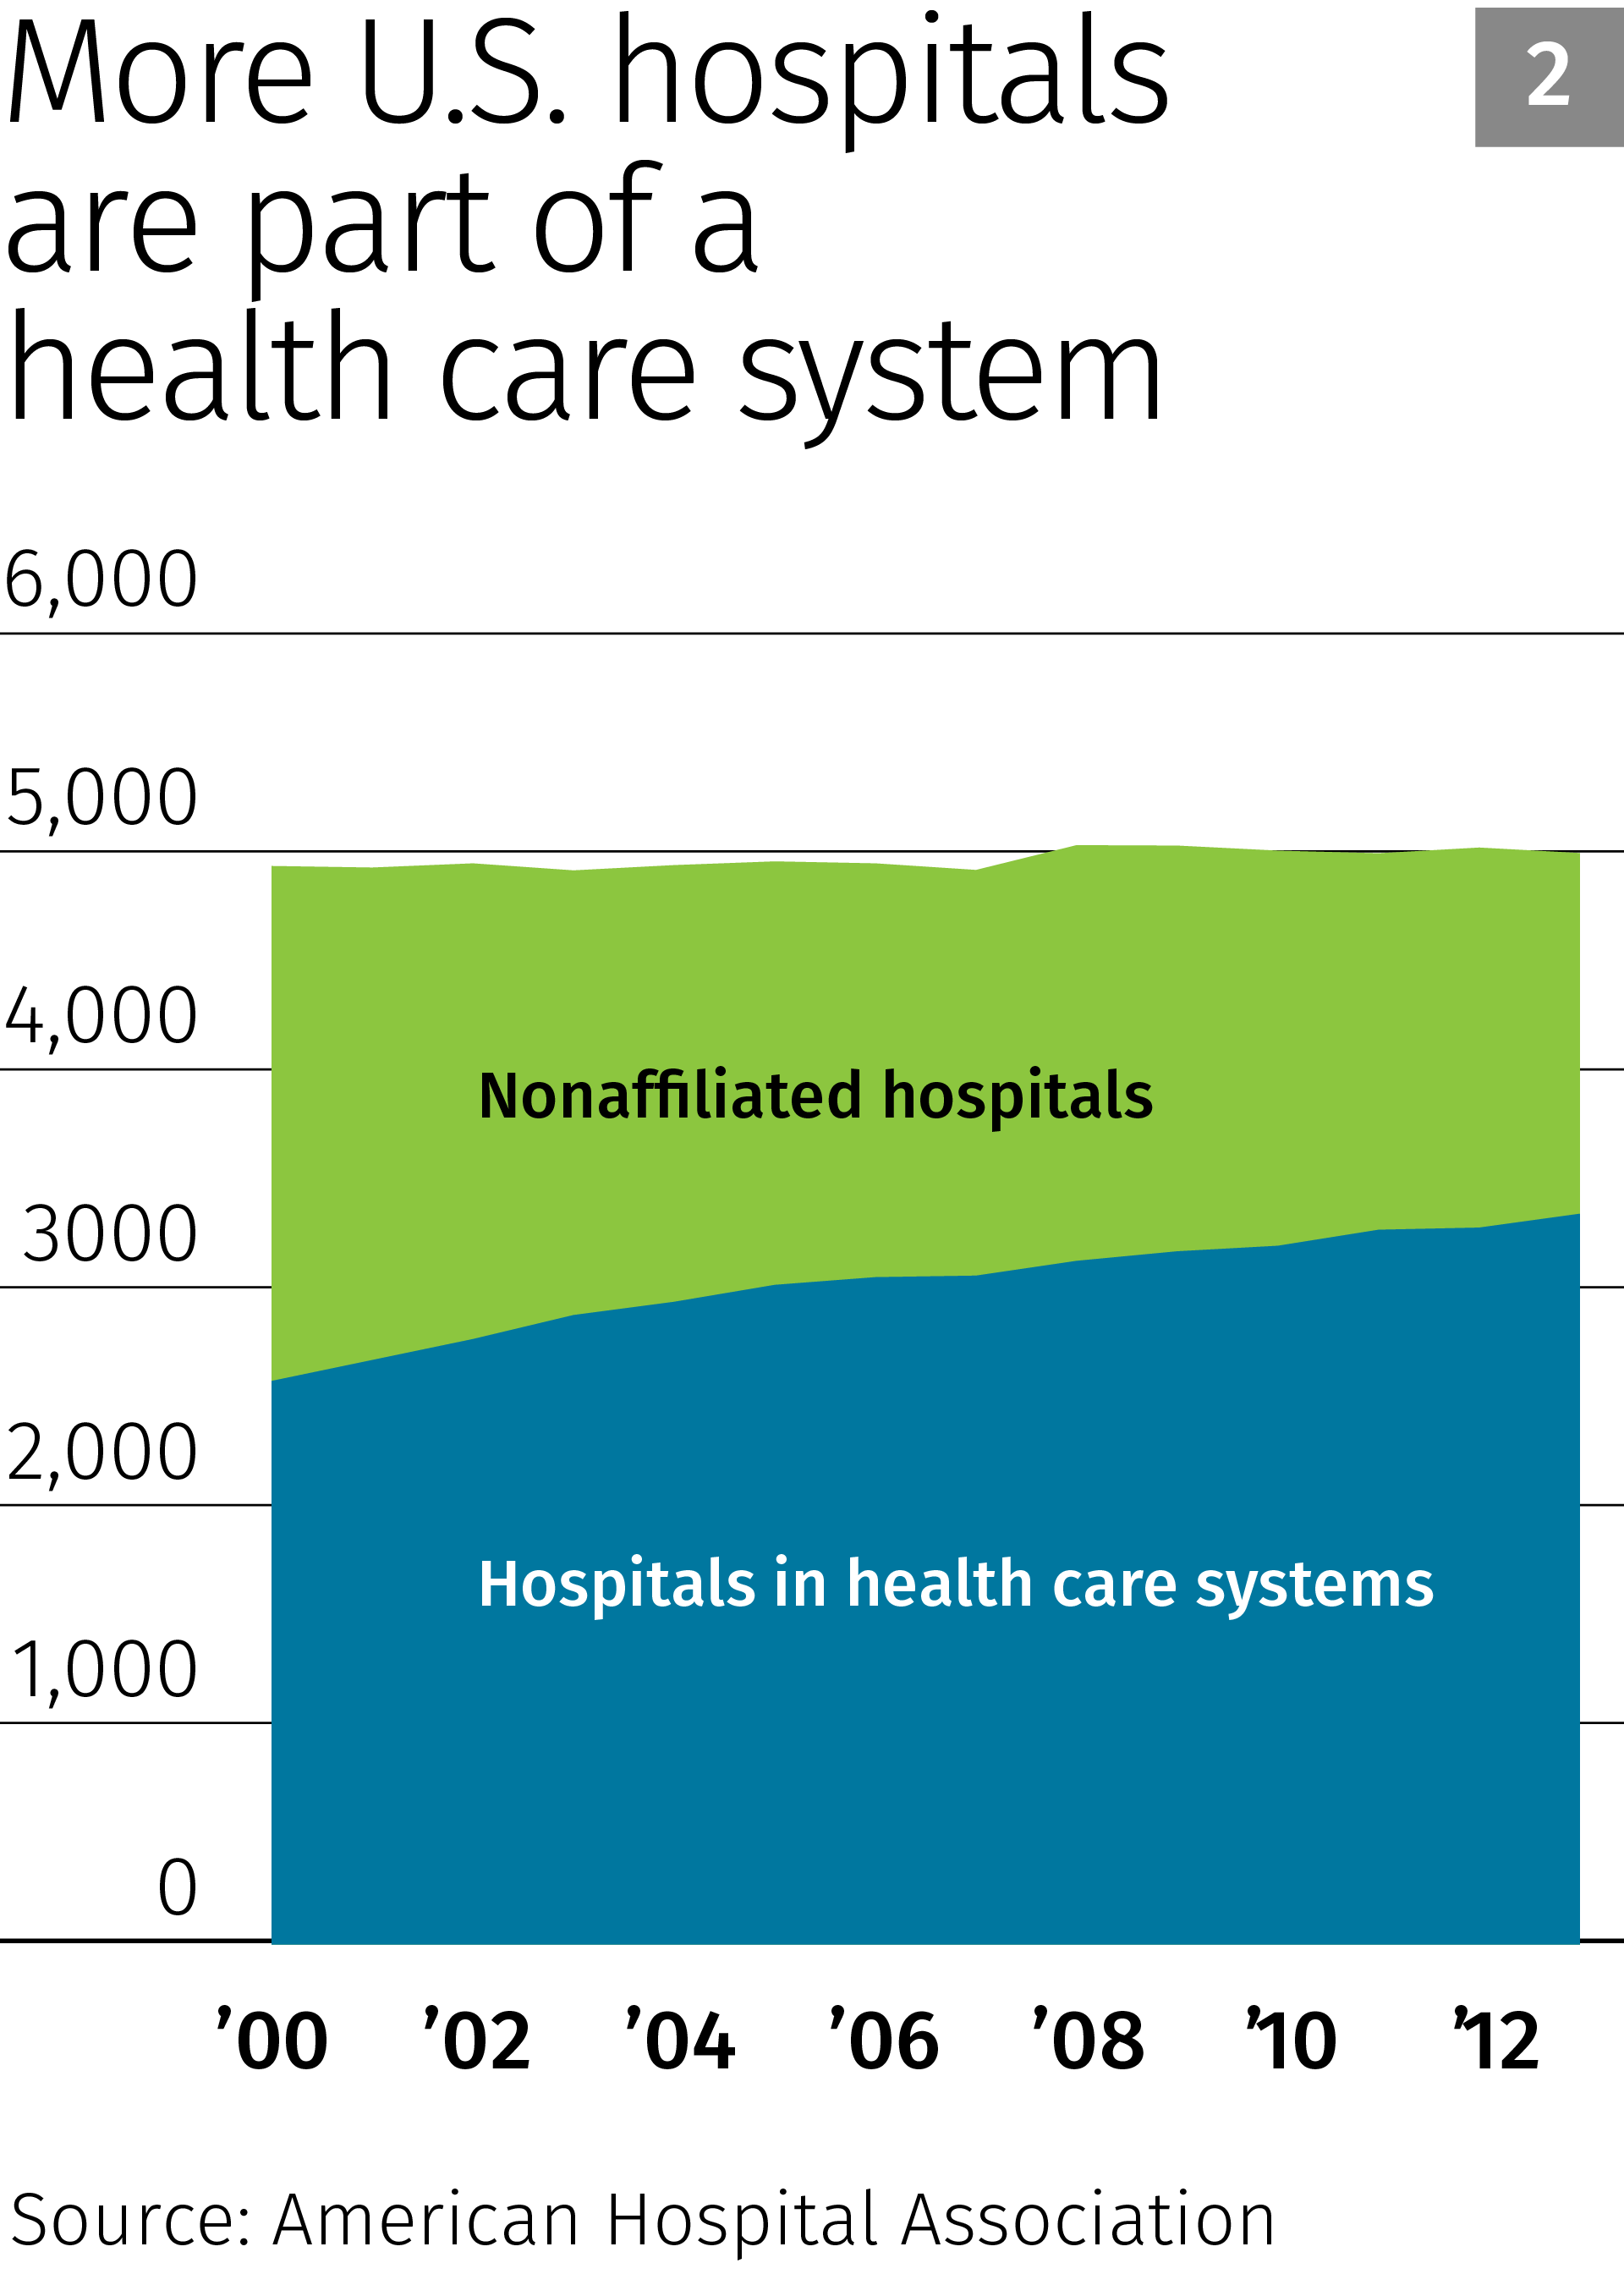 Sanford Health Organizational Chart